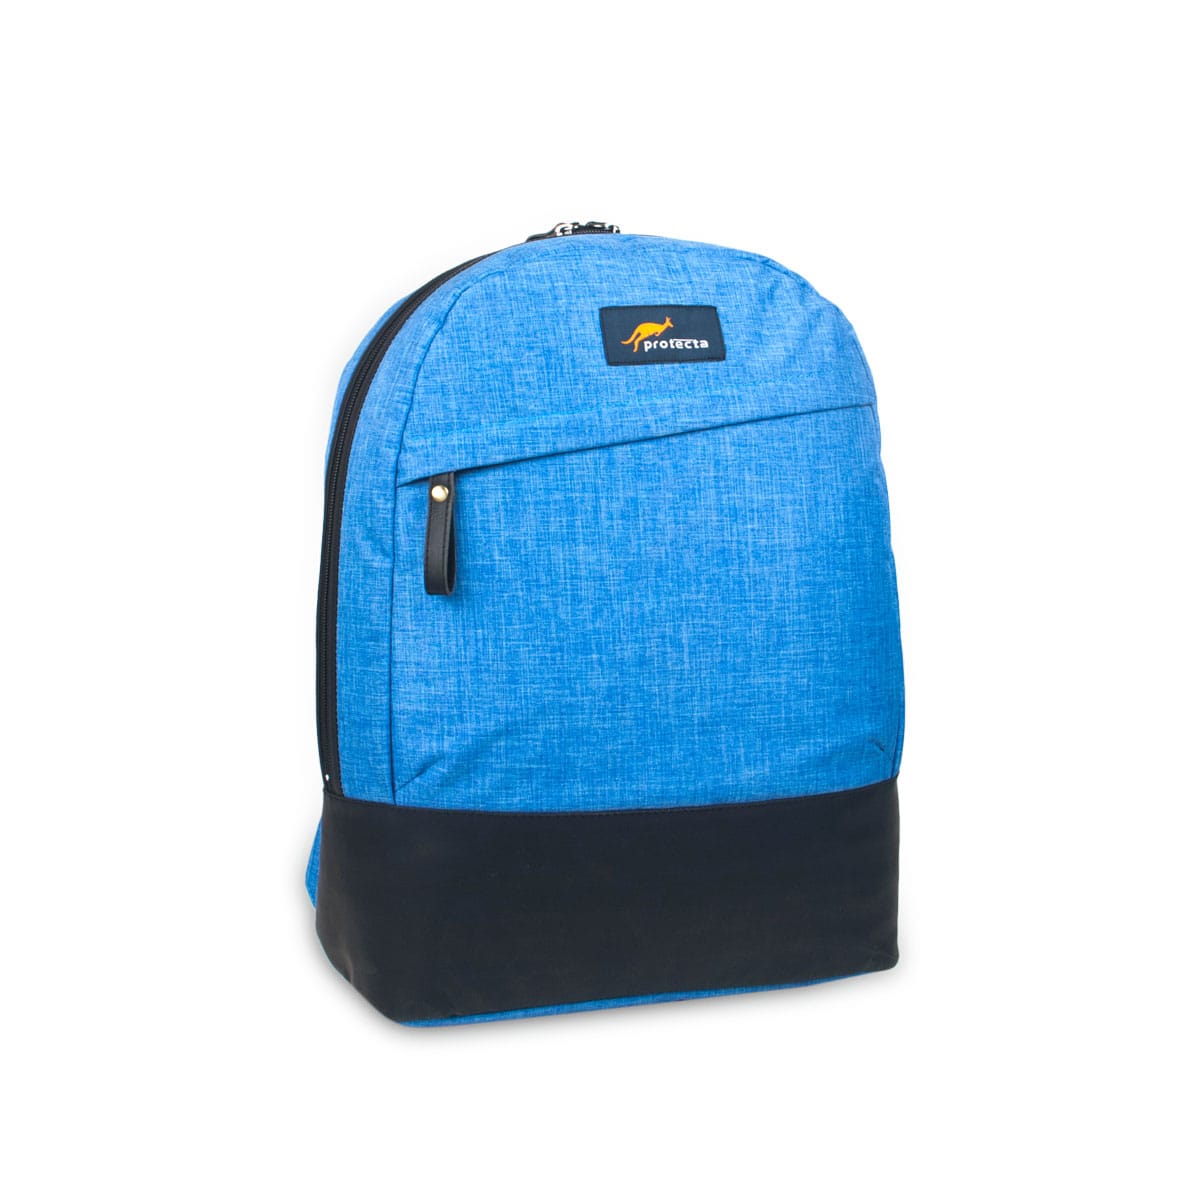 Black-Malibu Blue, Protecta Private Access Casual Backpack-1